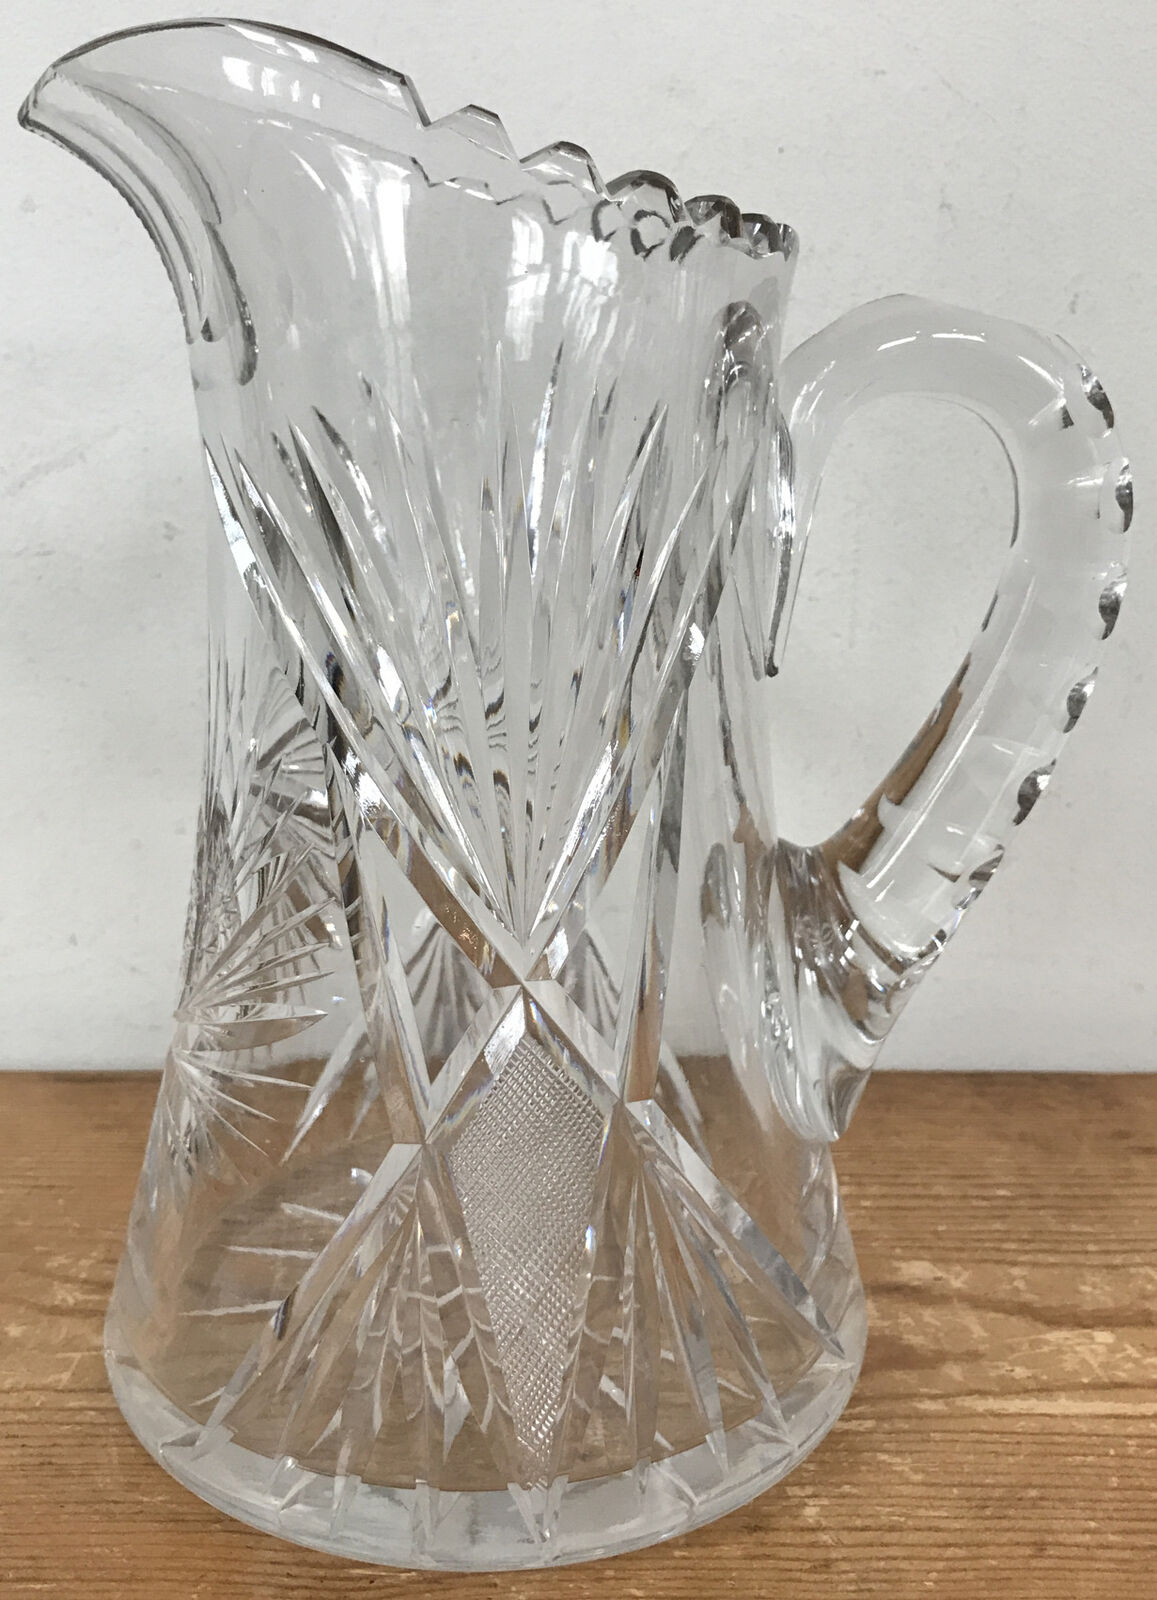 Vtg Antique American Brilliant ABCG Heavy Crystal Cut Glass Pitcher Jug Vase 9